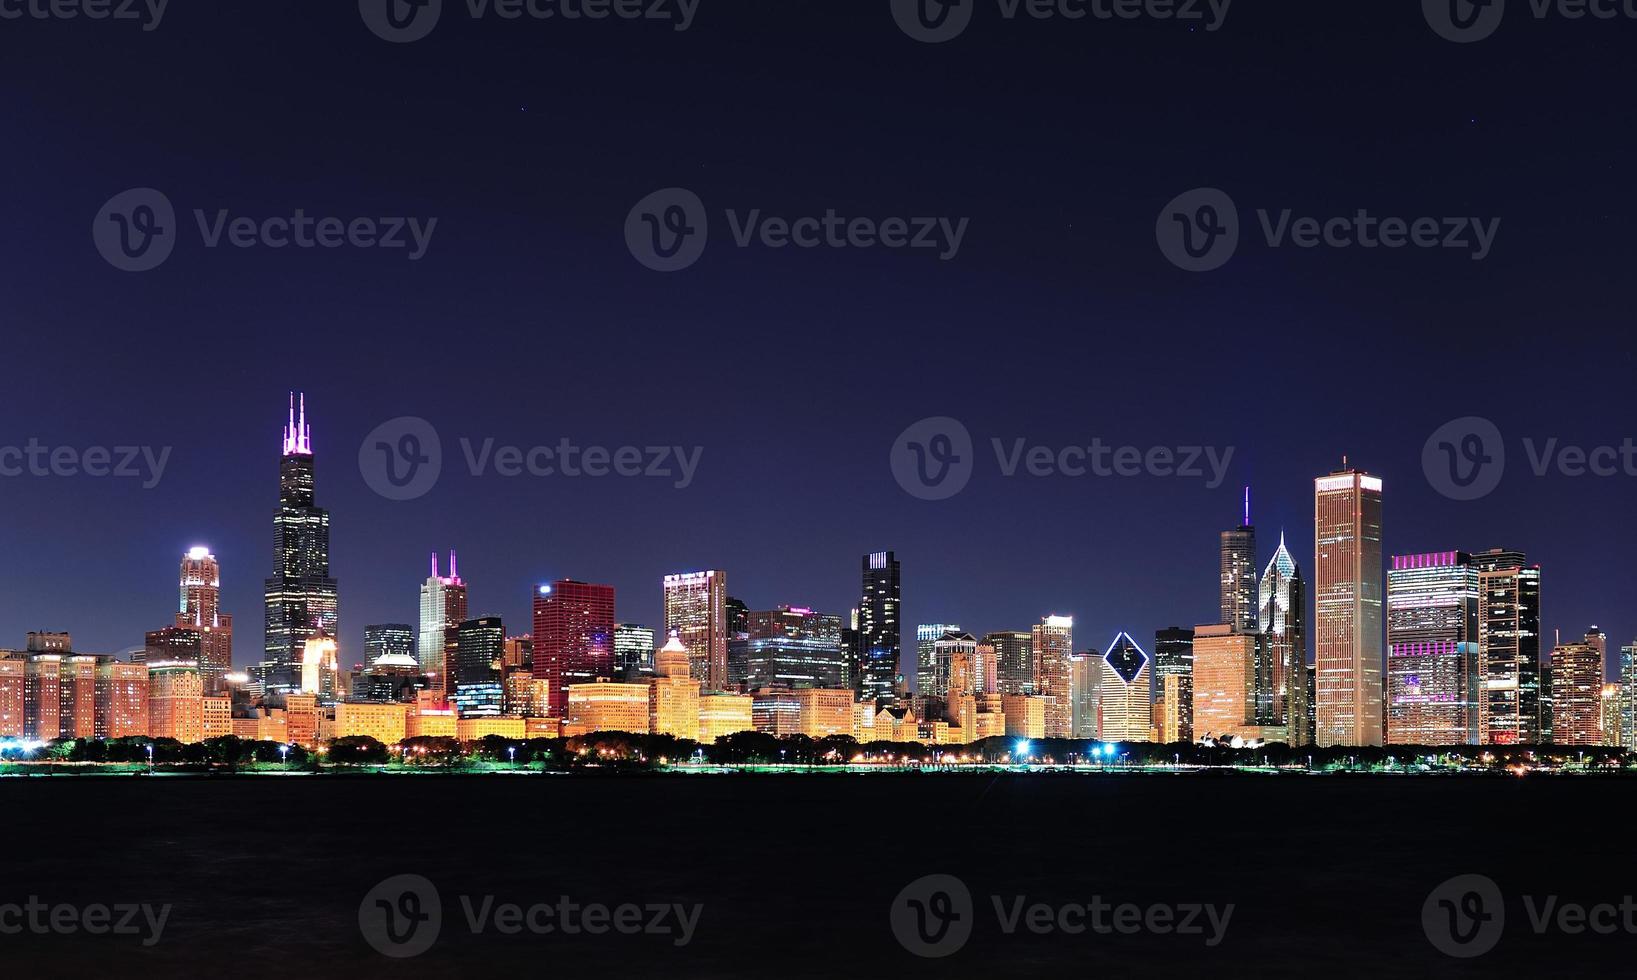 chicago skyline i skymningen foto